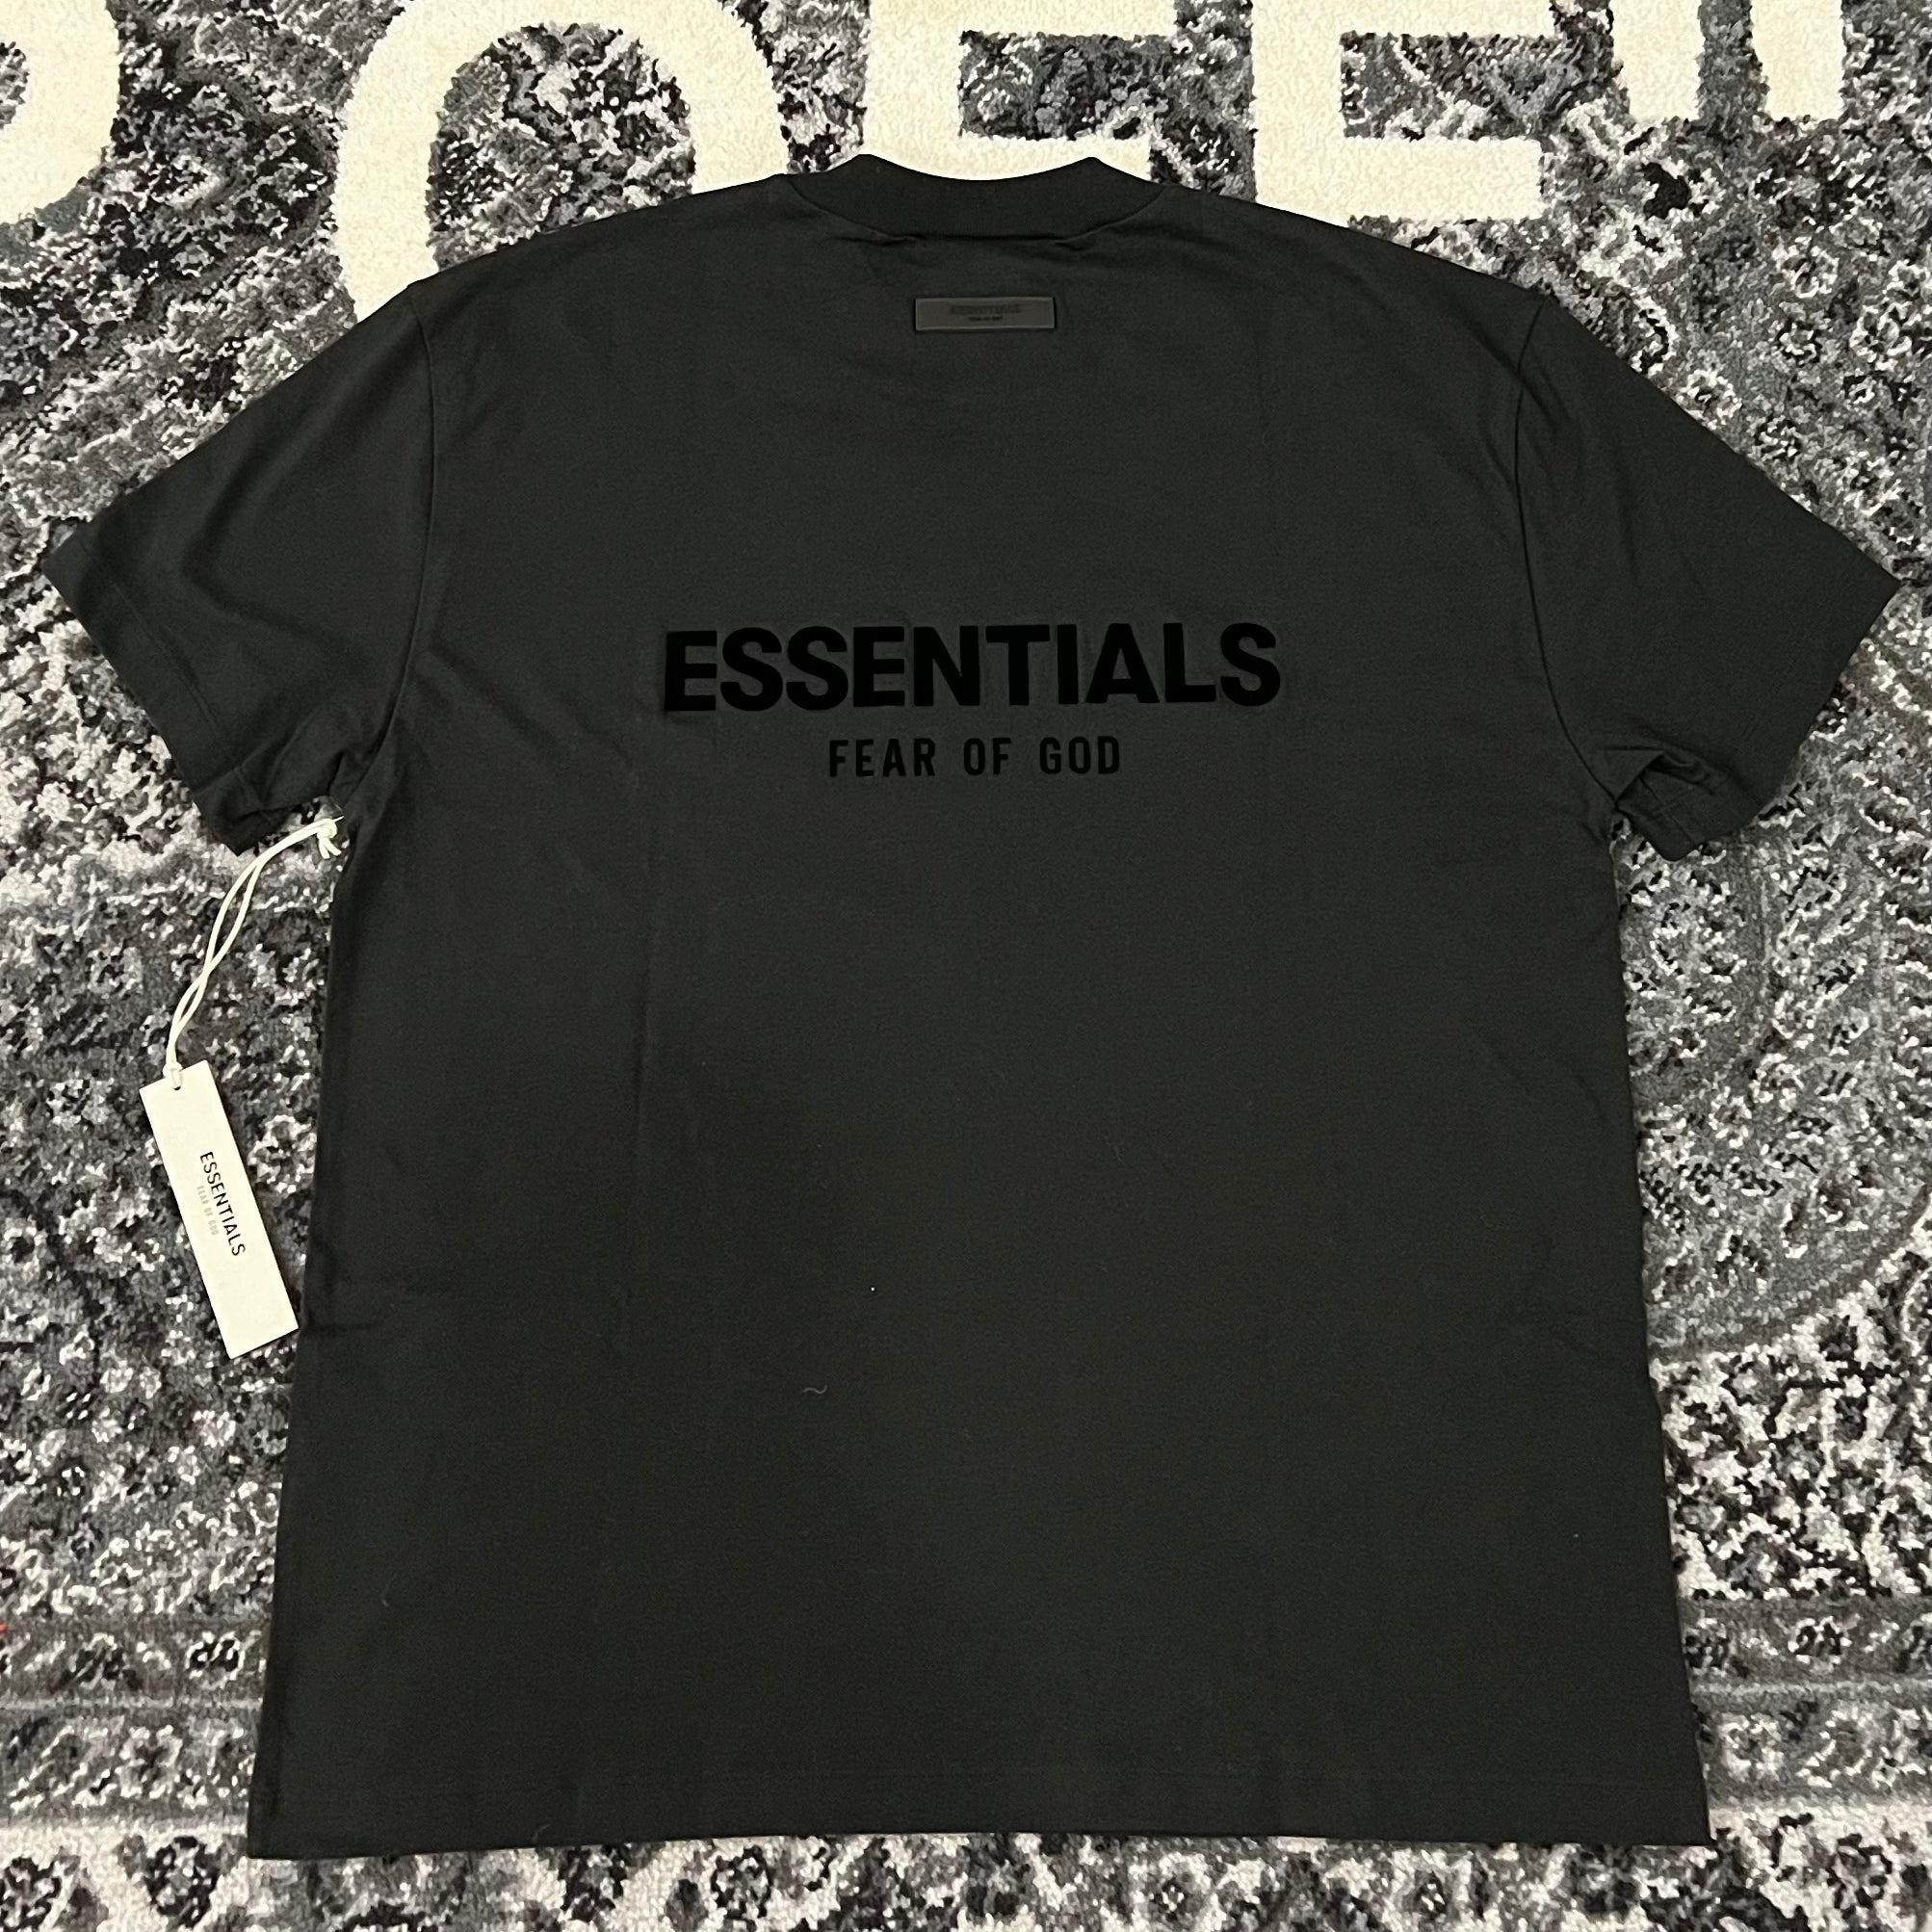 Essentials Fear of God T-shirt Black Showroom NHYPE Lodz Polska